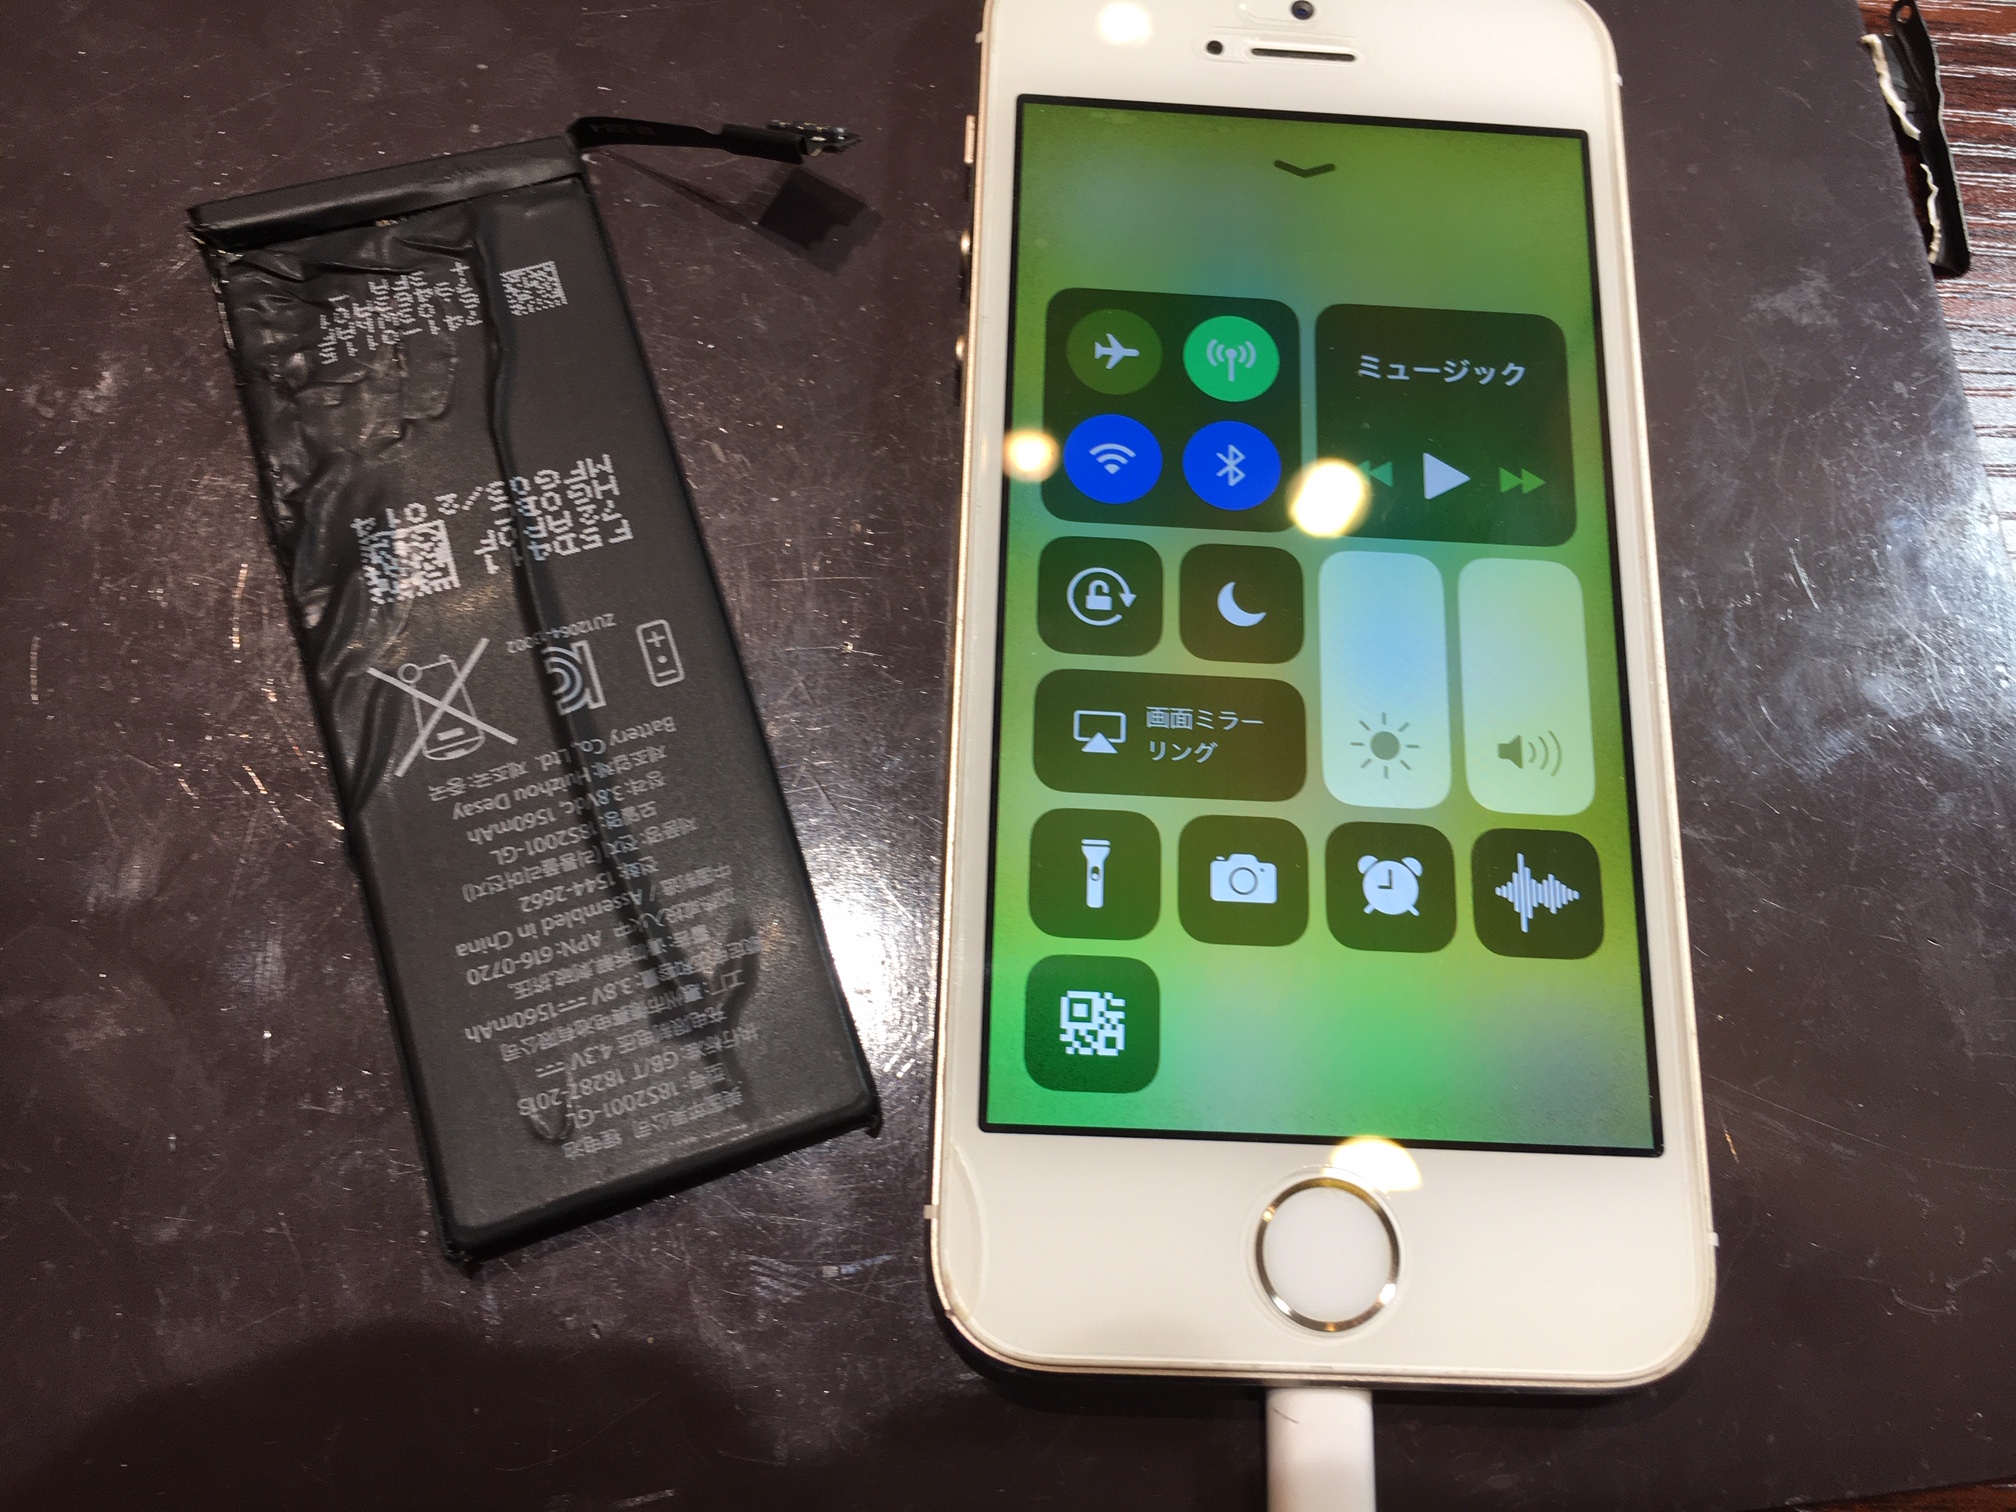 iPhone5s のバッテリー交換なら、尼崎のiPhone修理専門店スマートクールまで☆彡